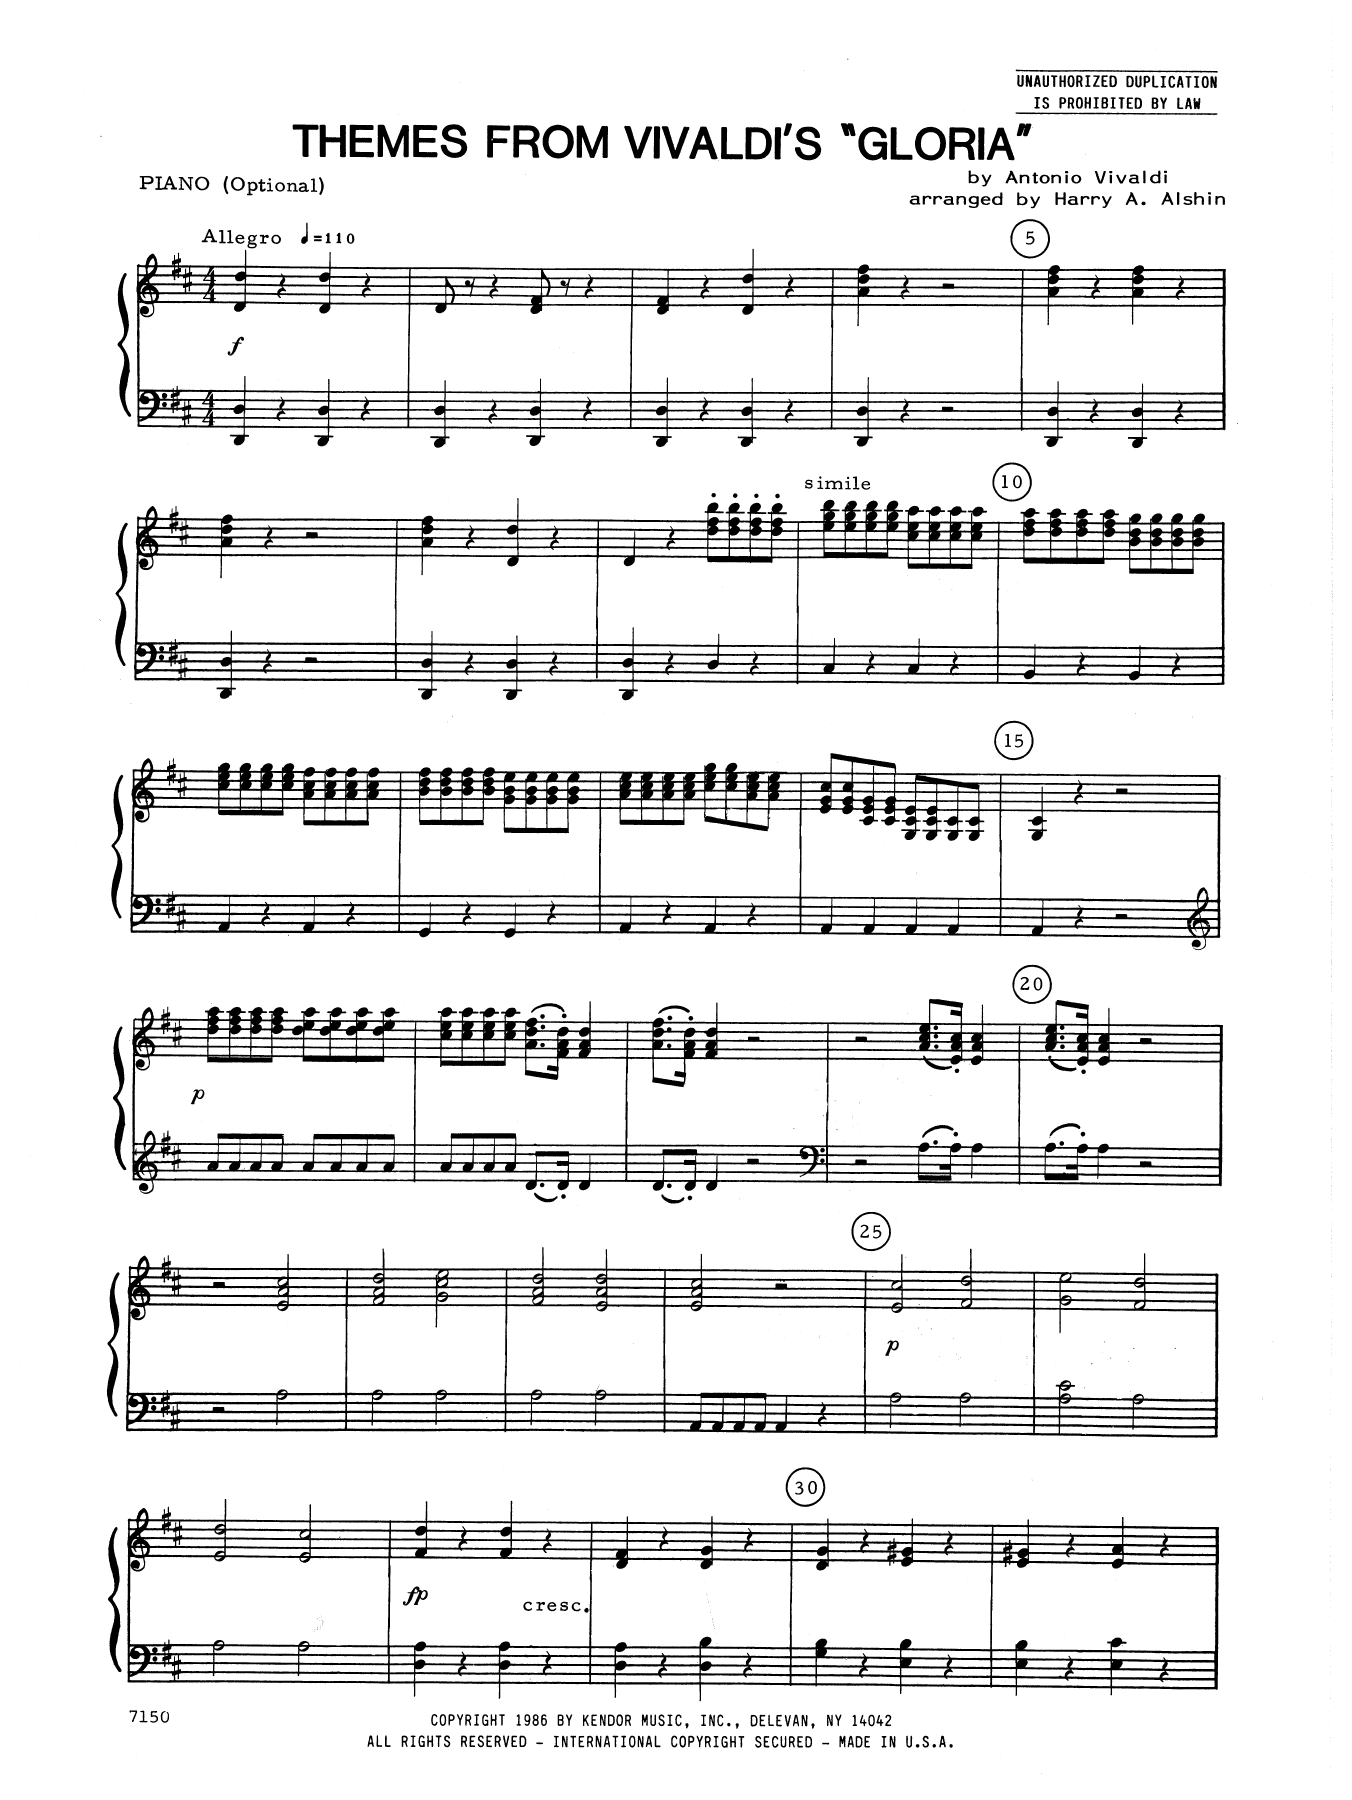 Themes From Vivaldi's Gloria - Piano Accompaniment sheet music